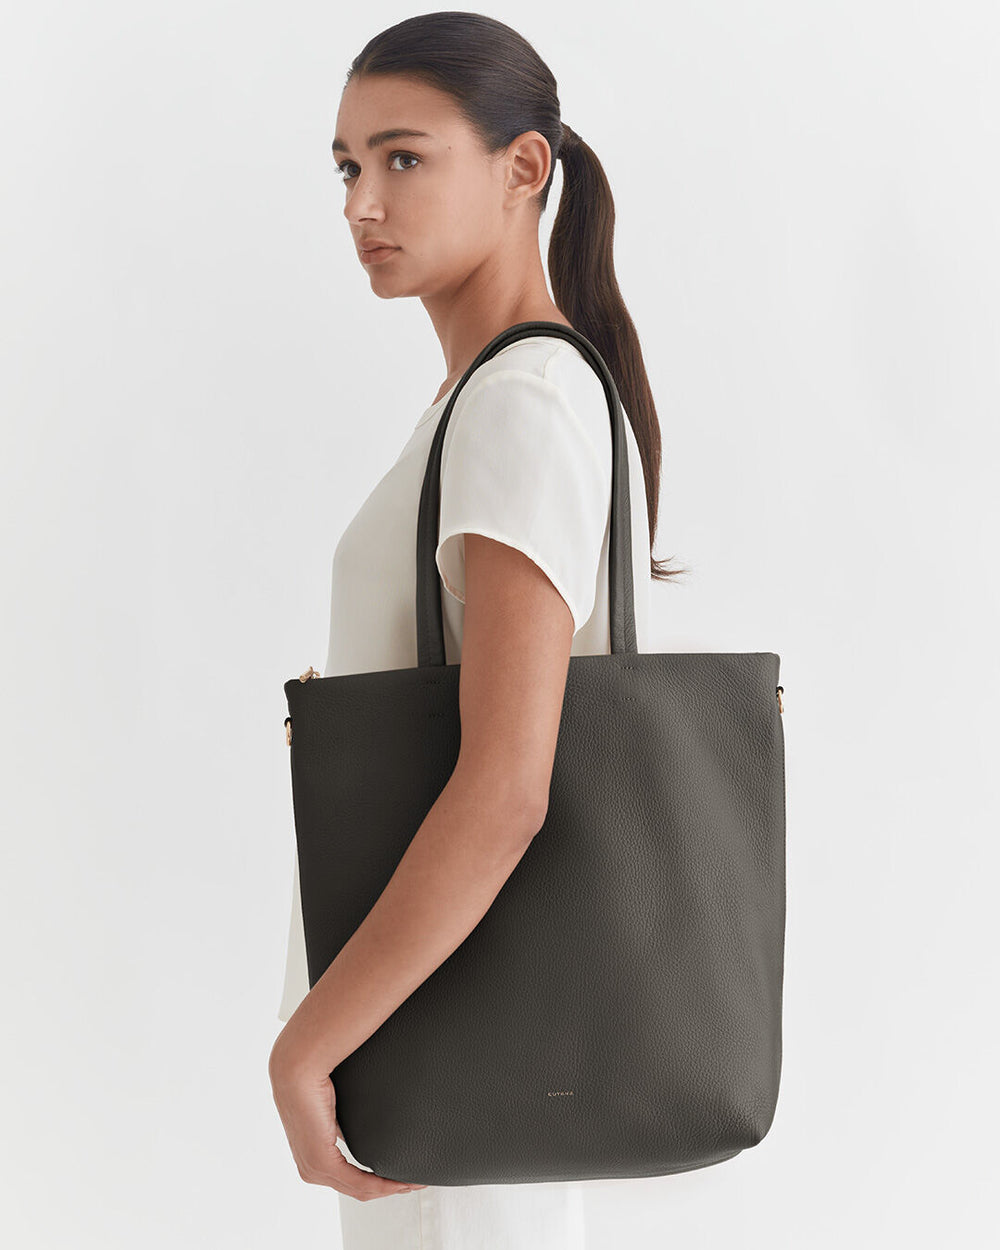 Woman standing sideways holding a large shoulder bag.